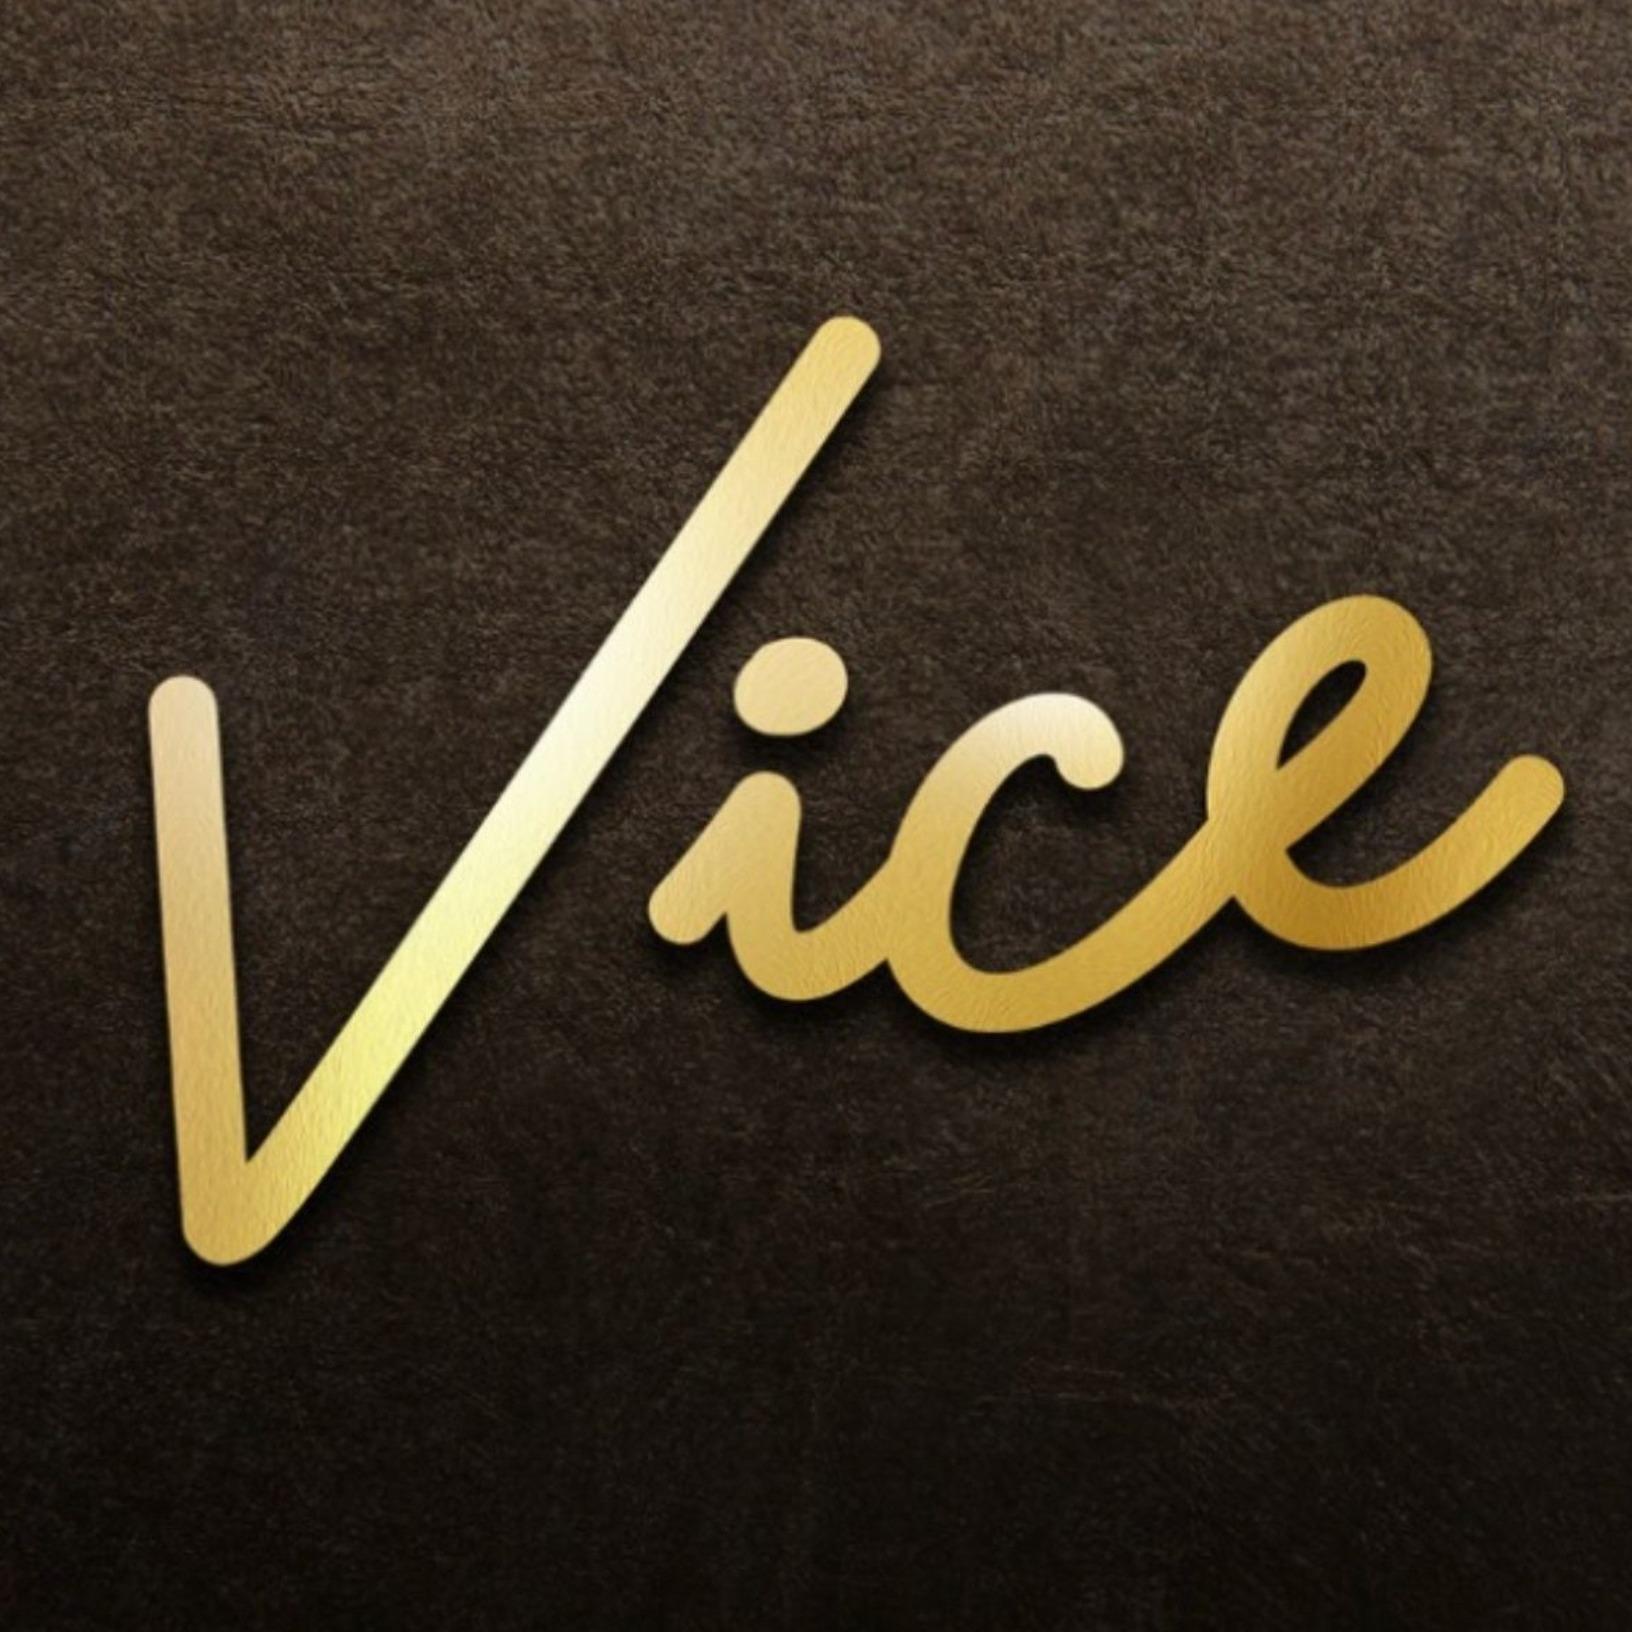 VICE Dubai